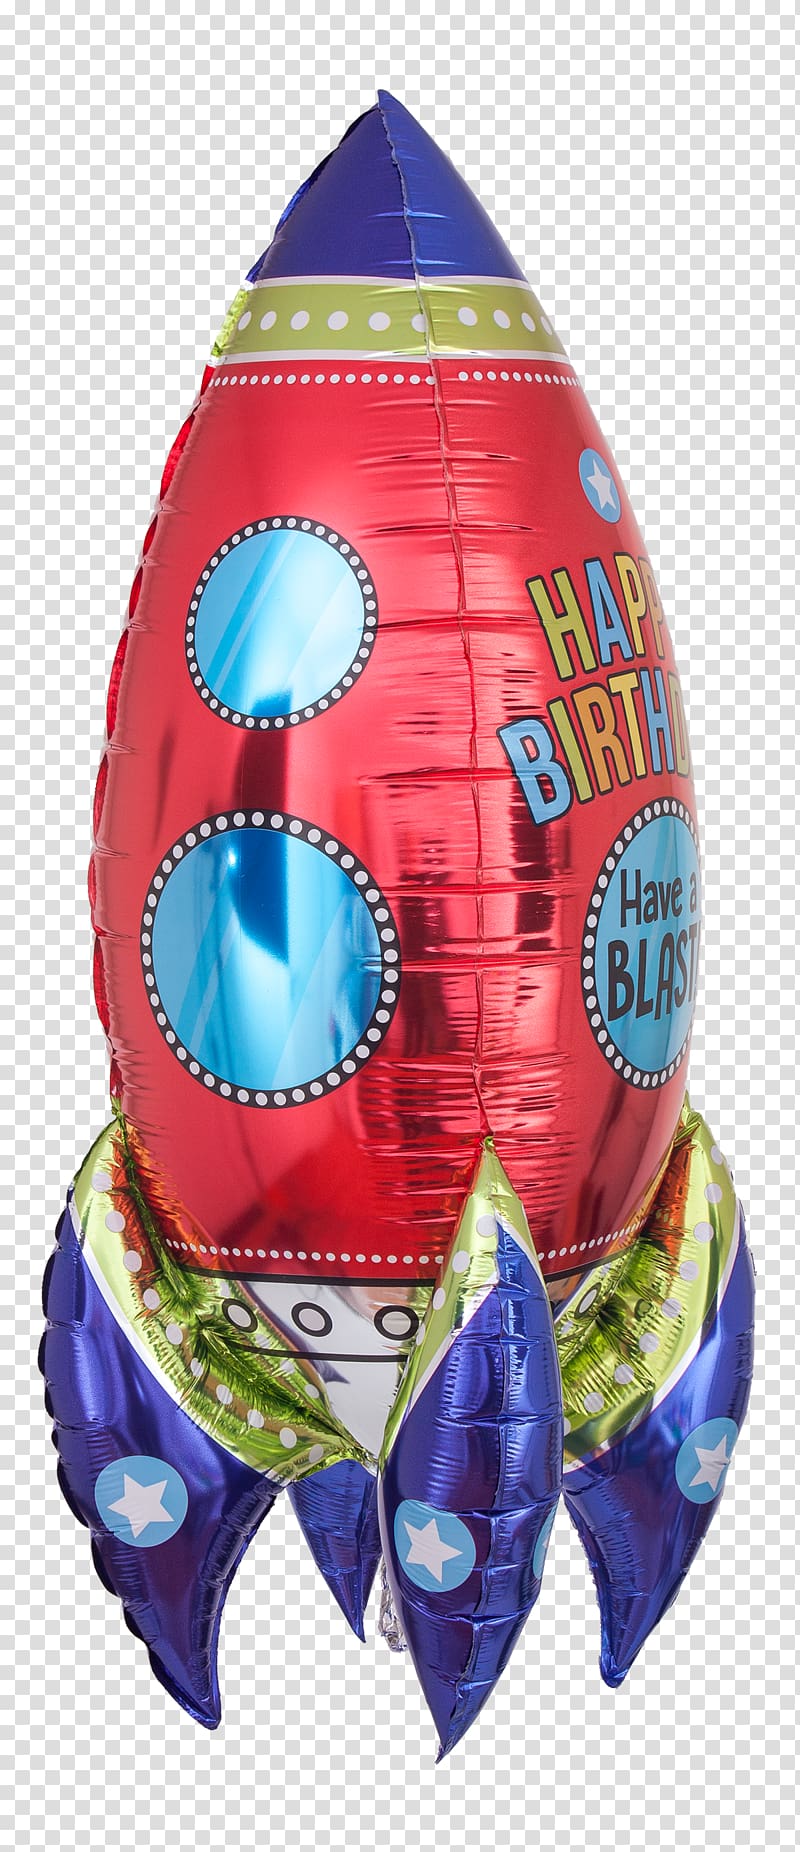 Toy balloon Balloon rocket Birthday, balloon transparent background PNG clipart